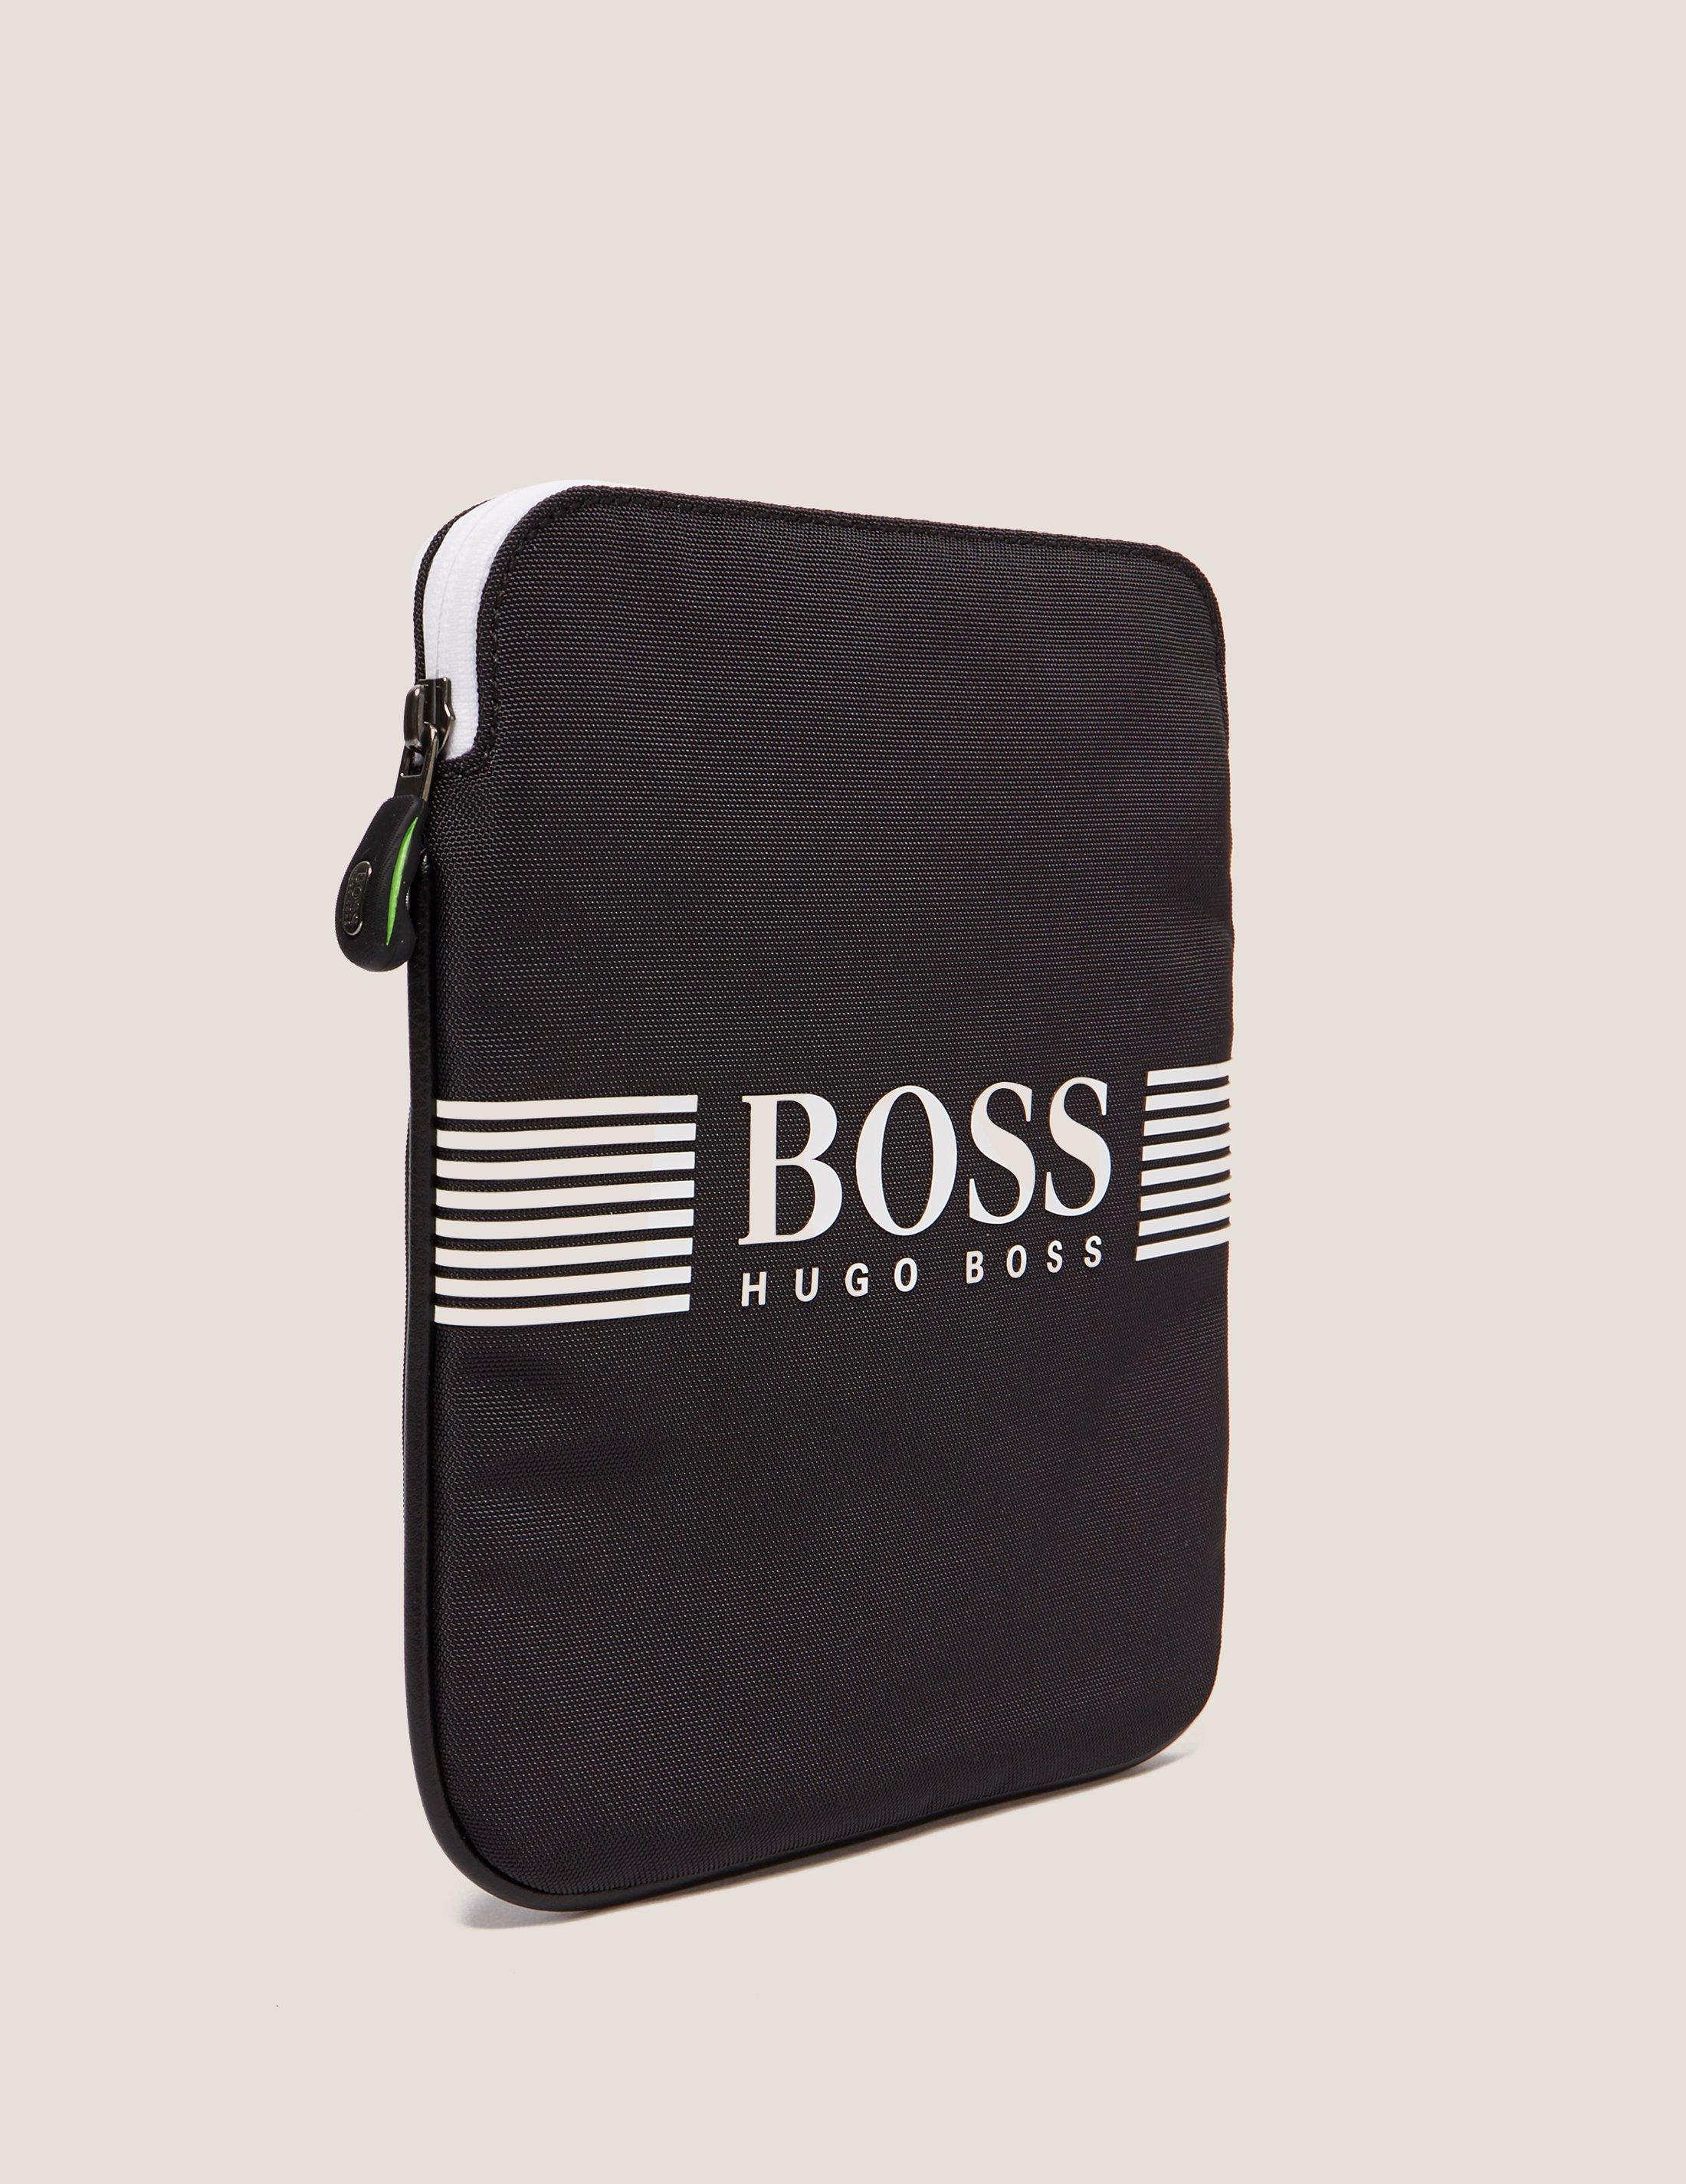 hugo boss mens pouch bag